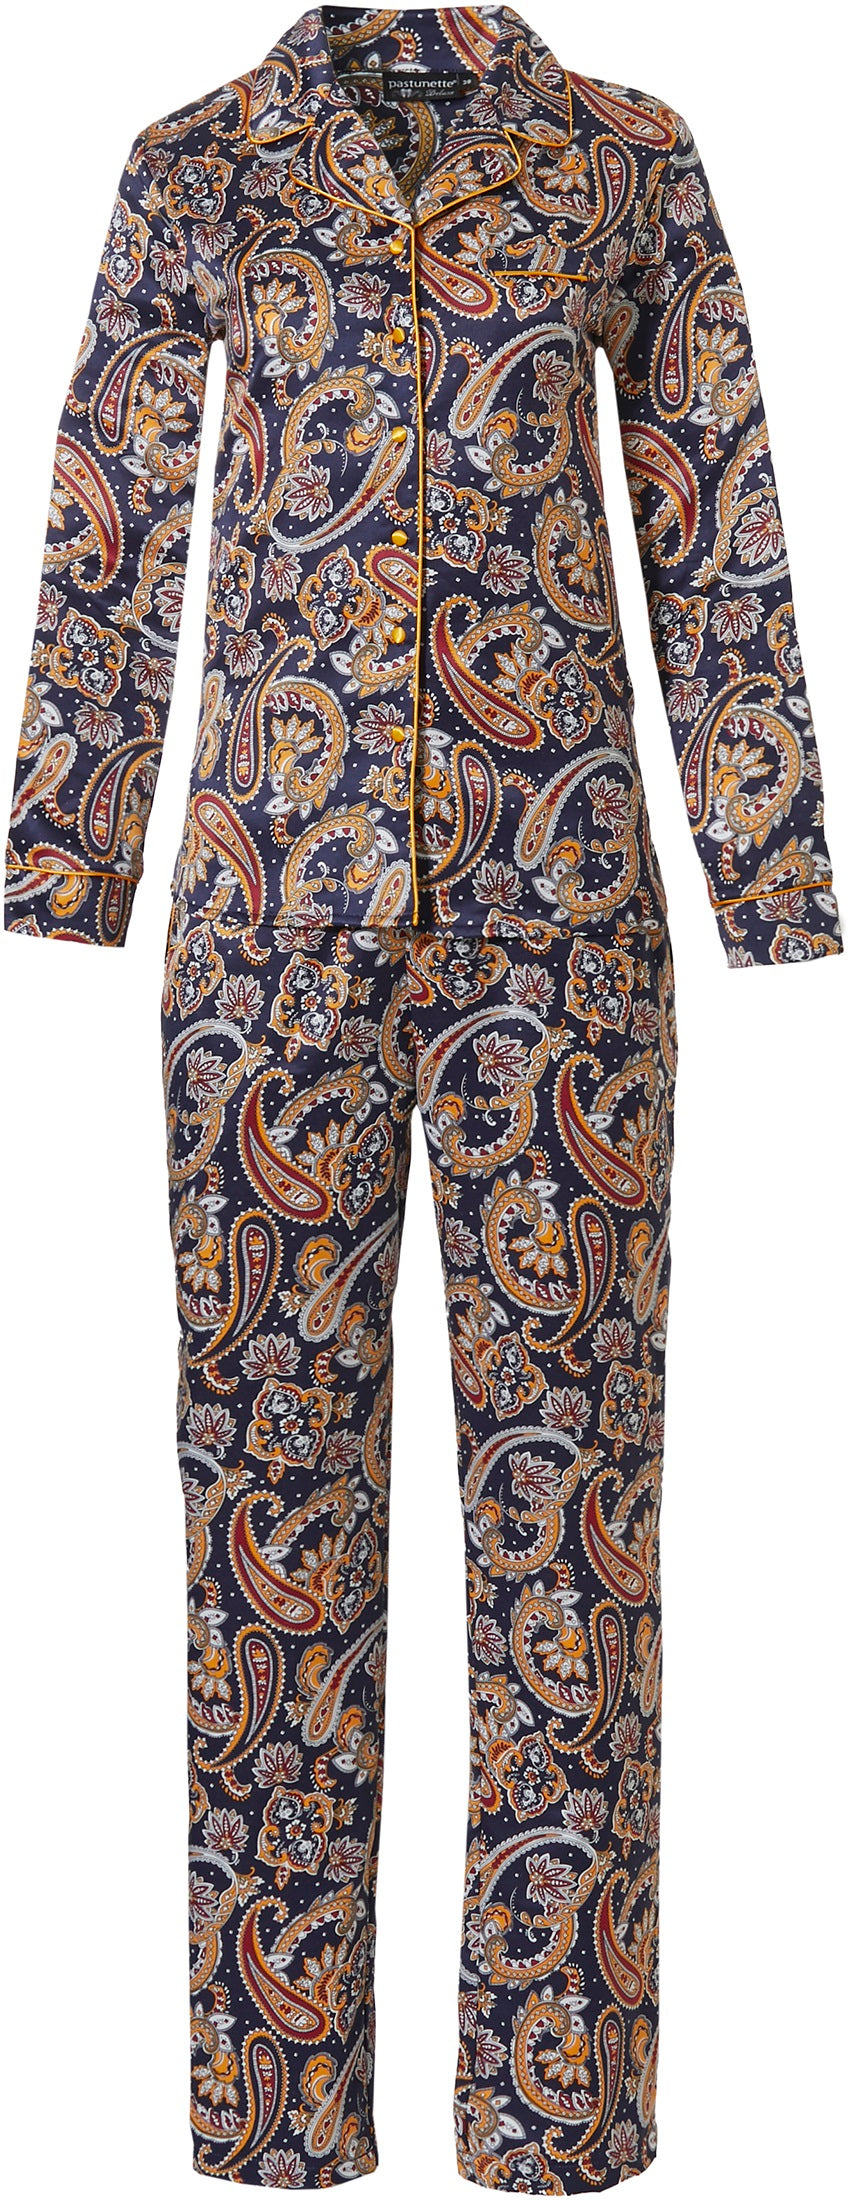 Pastunette Ladies Navy Blue Paisley Print Pyjama Set 100% Cotton